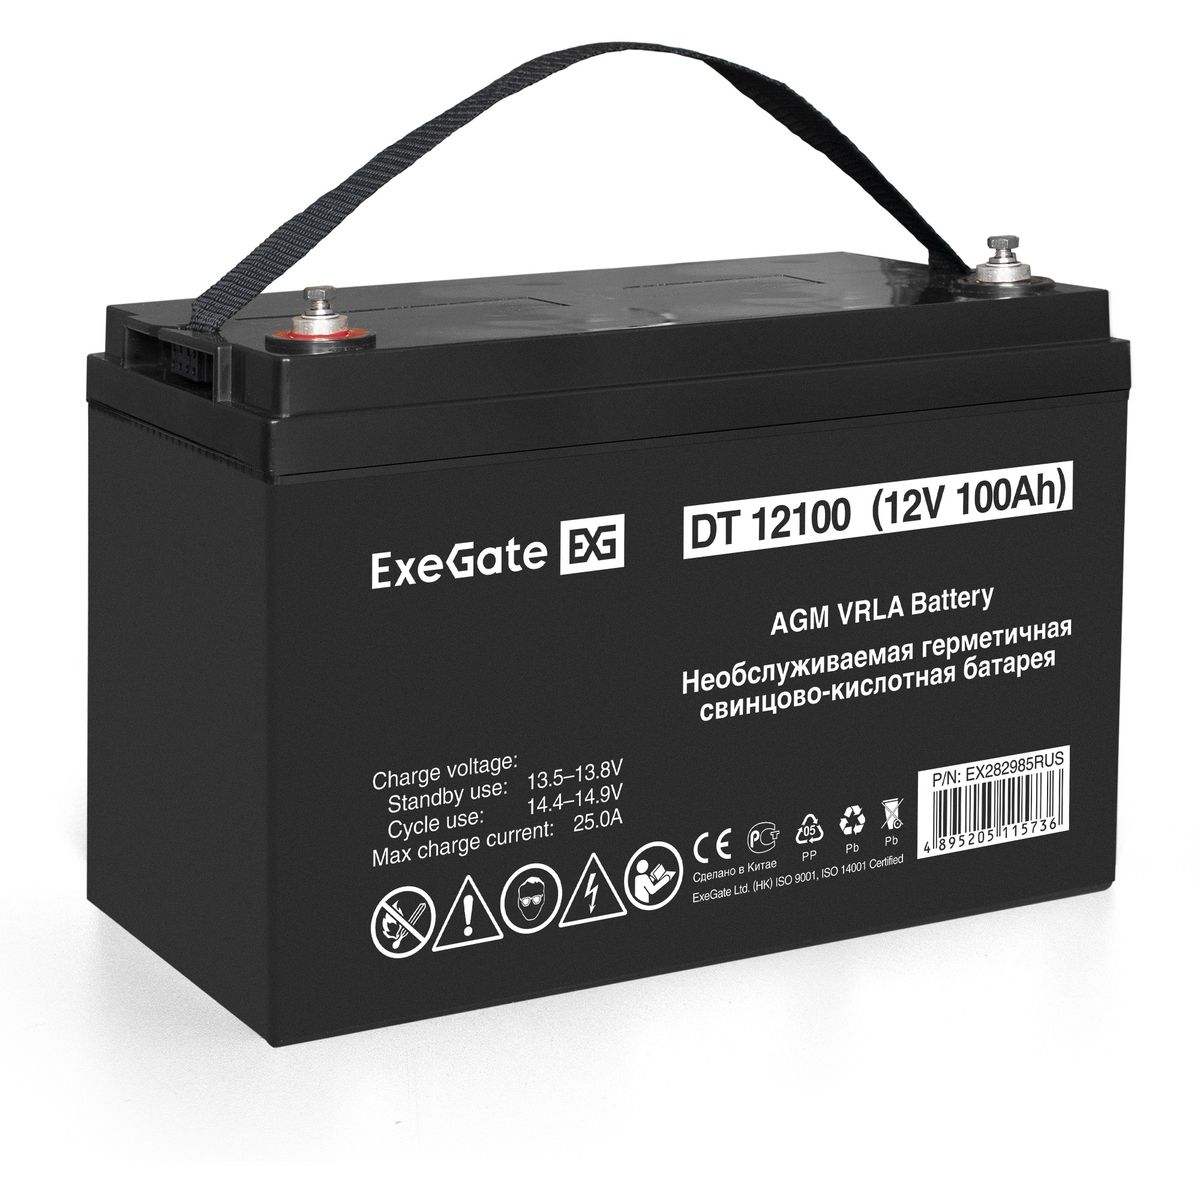 UPS set EX295995 + battery 100Ah EX282985 1 piece